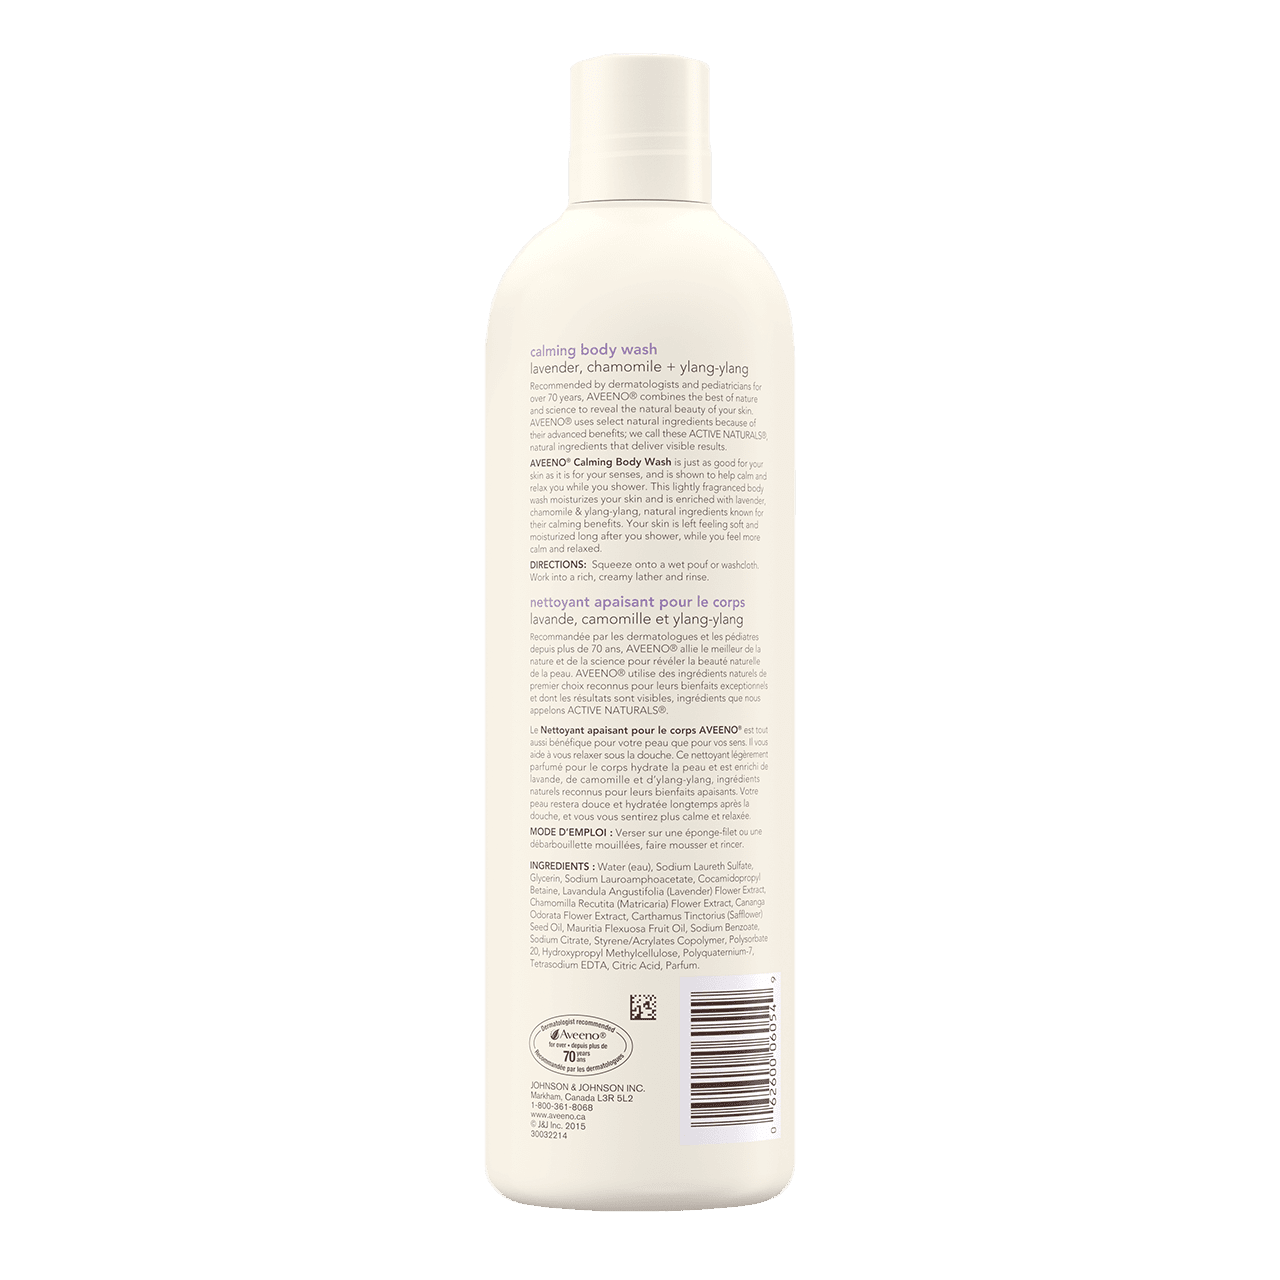 AVEENO® Calming Body Wash, 473ml bottle, back label